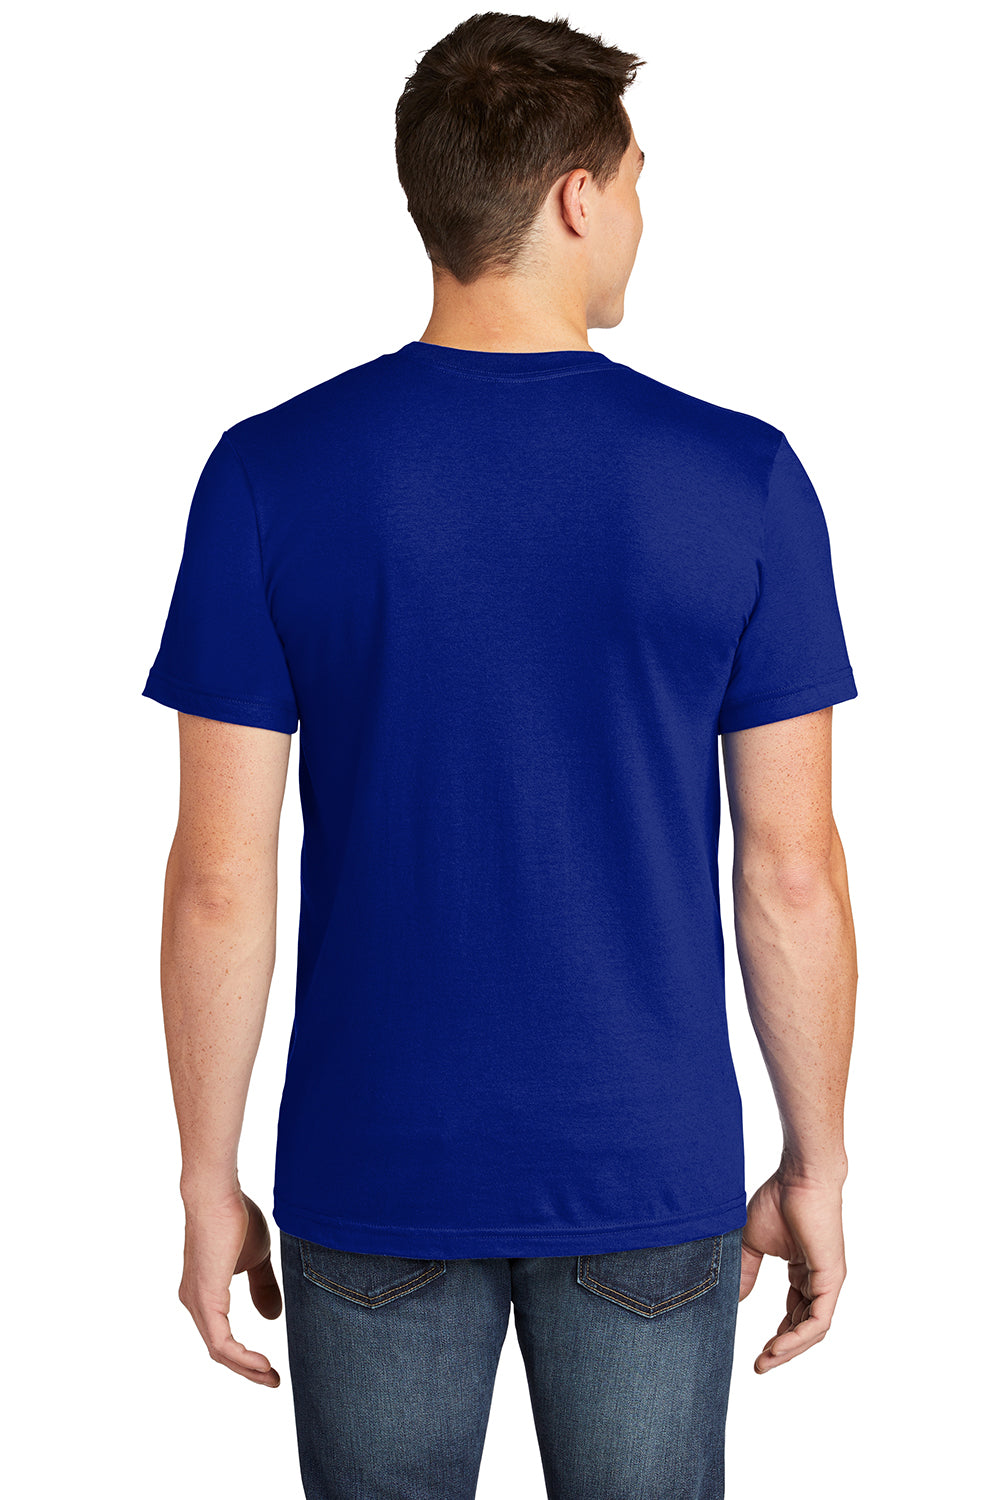 American Apparel 2001 Mens Fine Jersey Short Sleeve Crewneck T-Shirt Lapis Blue Model Back